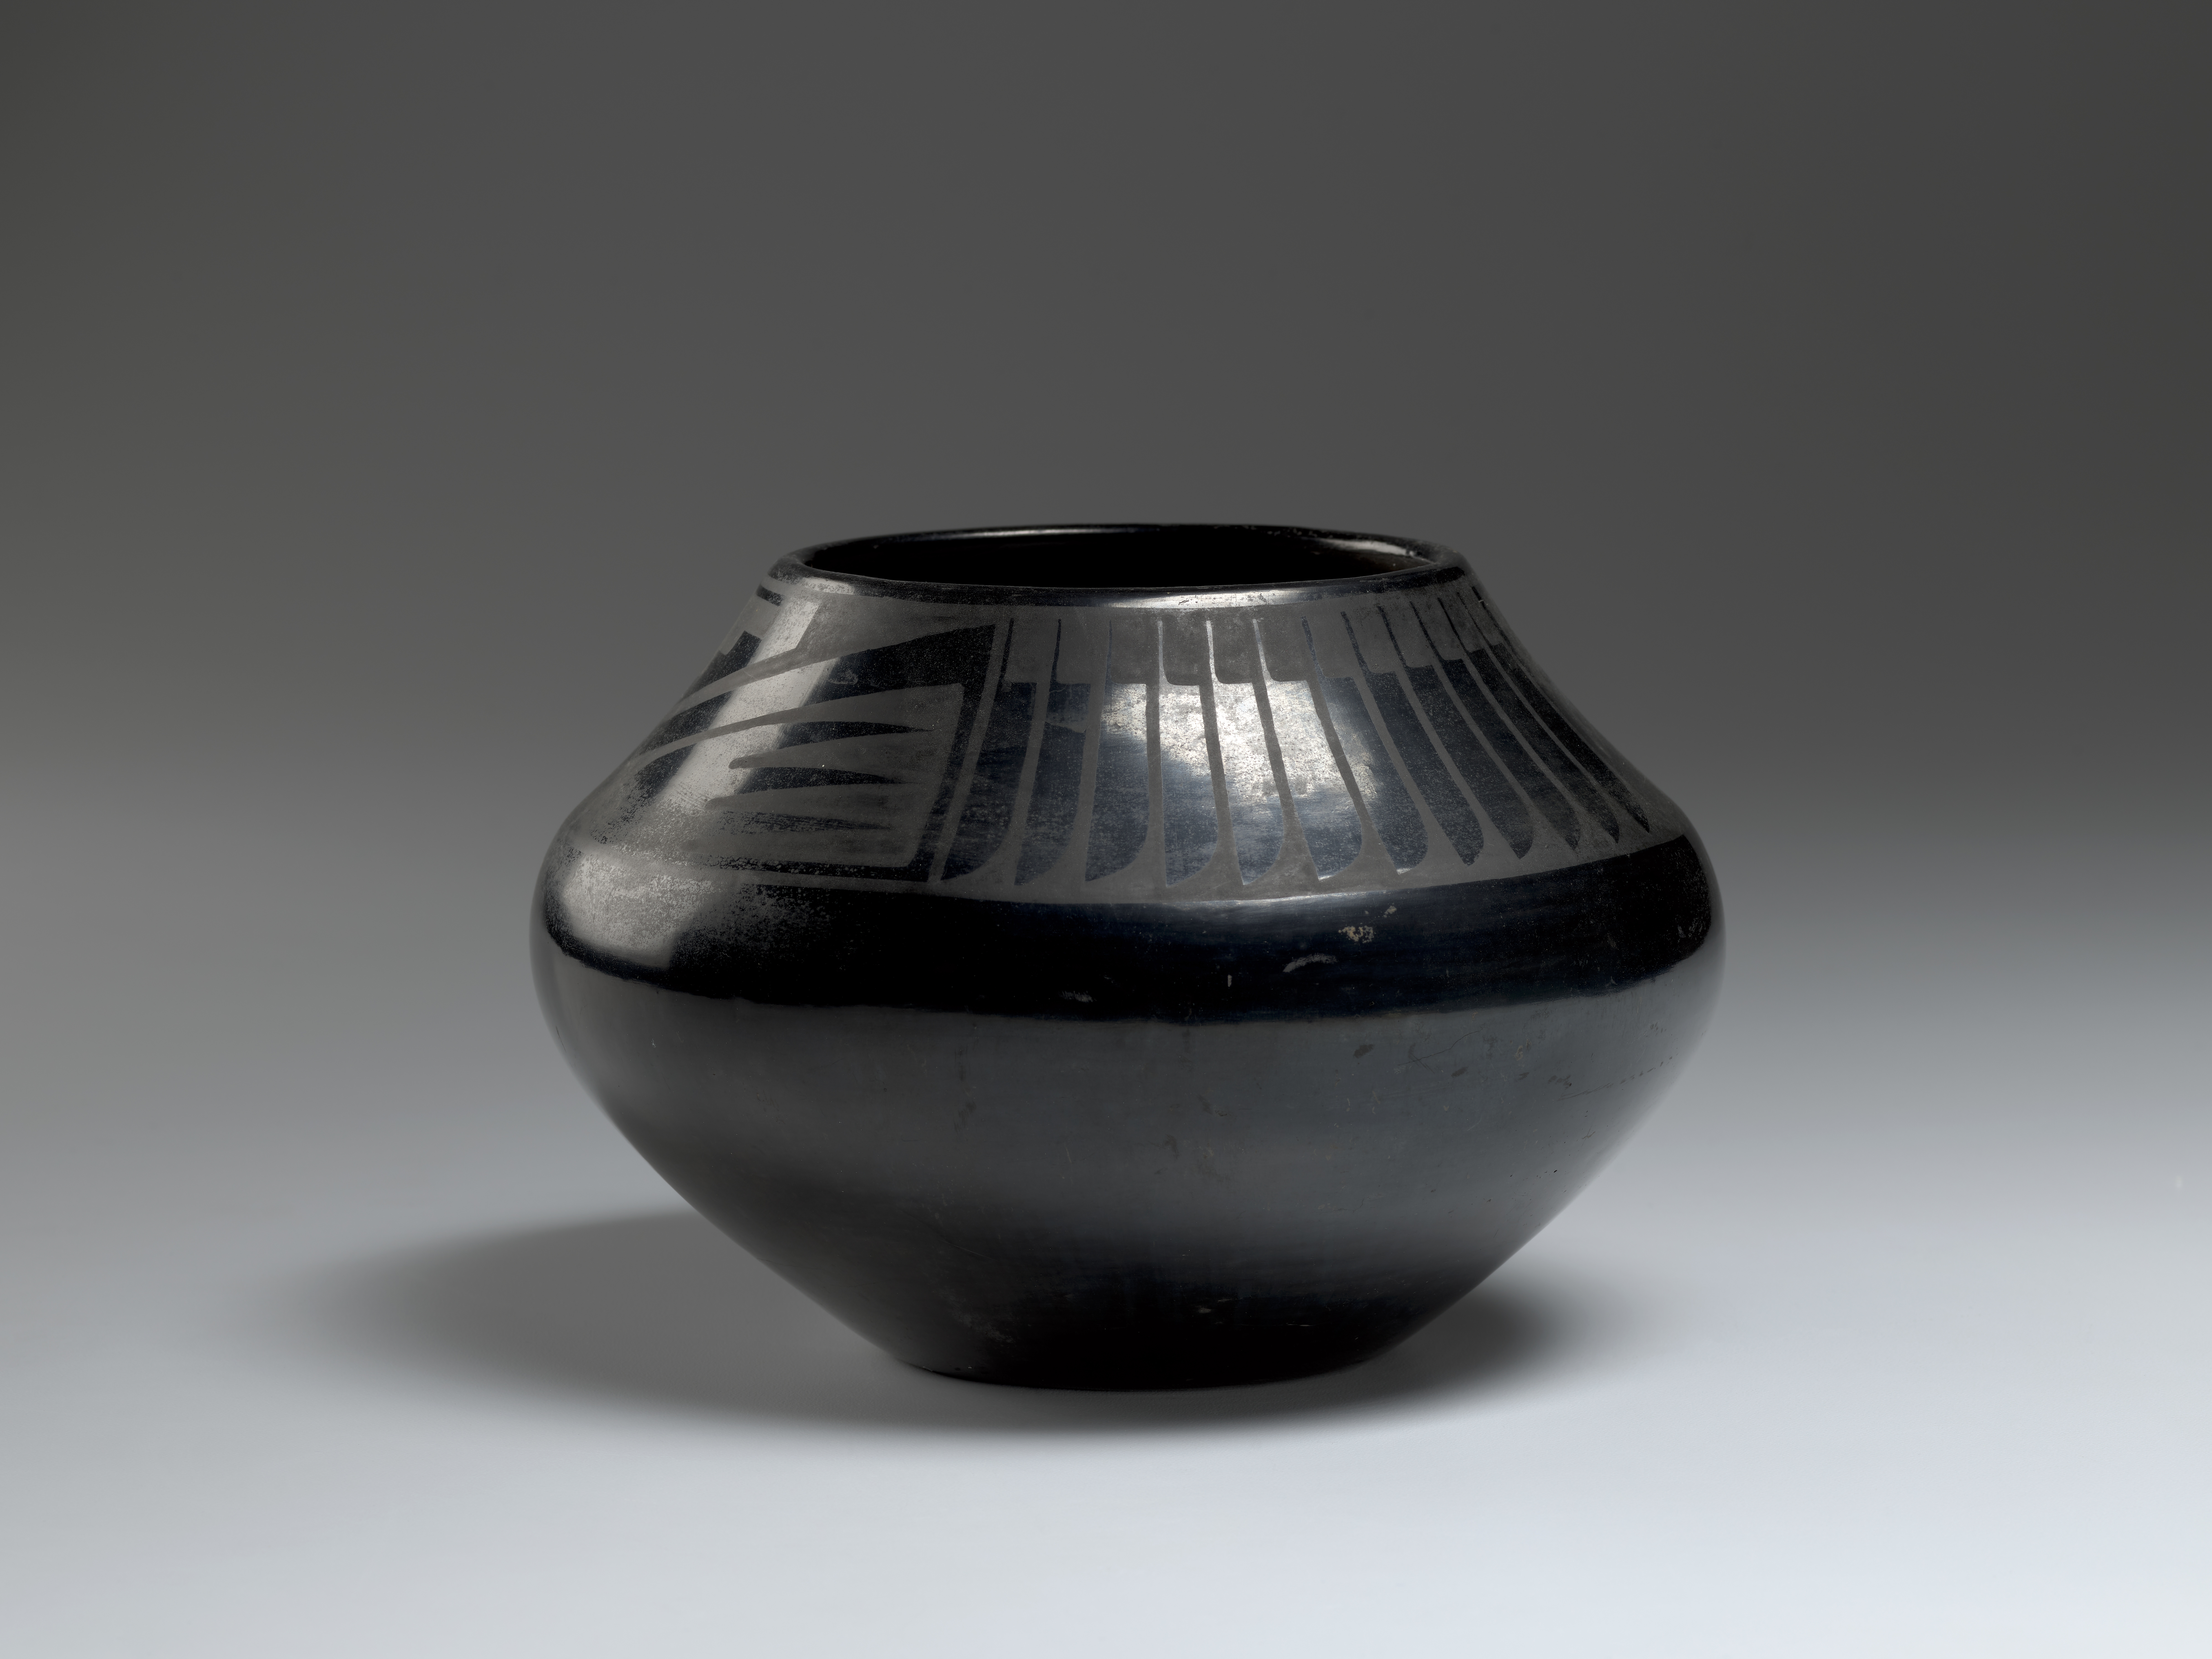 A shiny black bowl with matte black designs around the top rim.